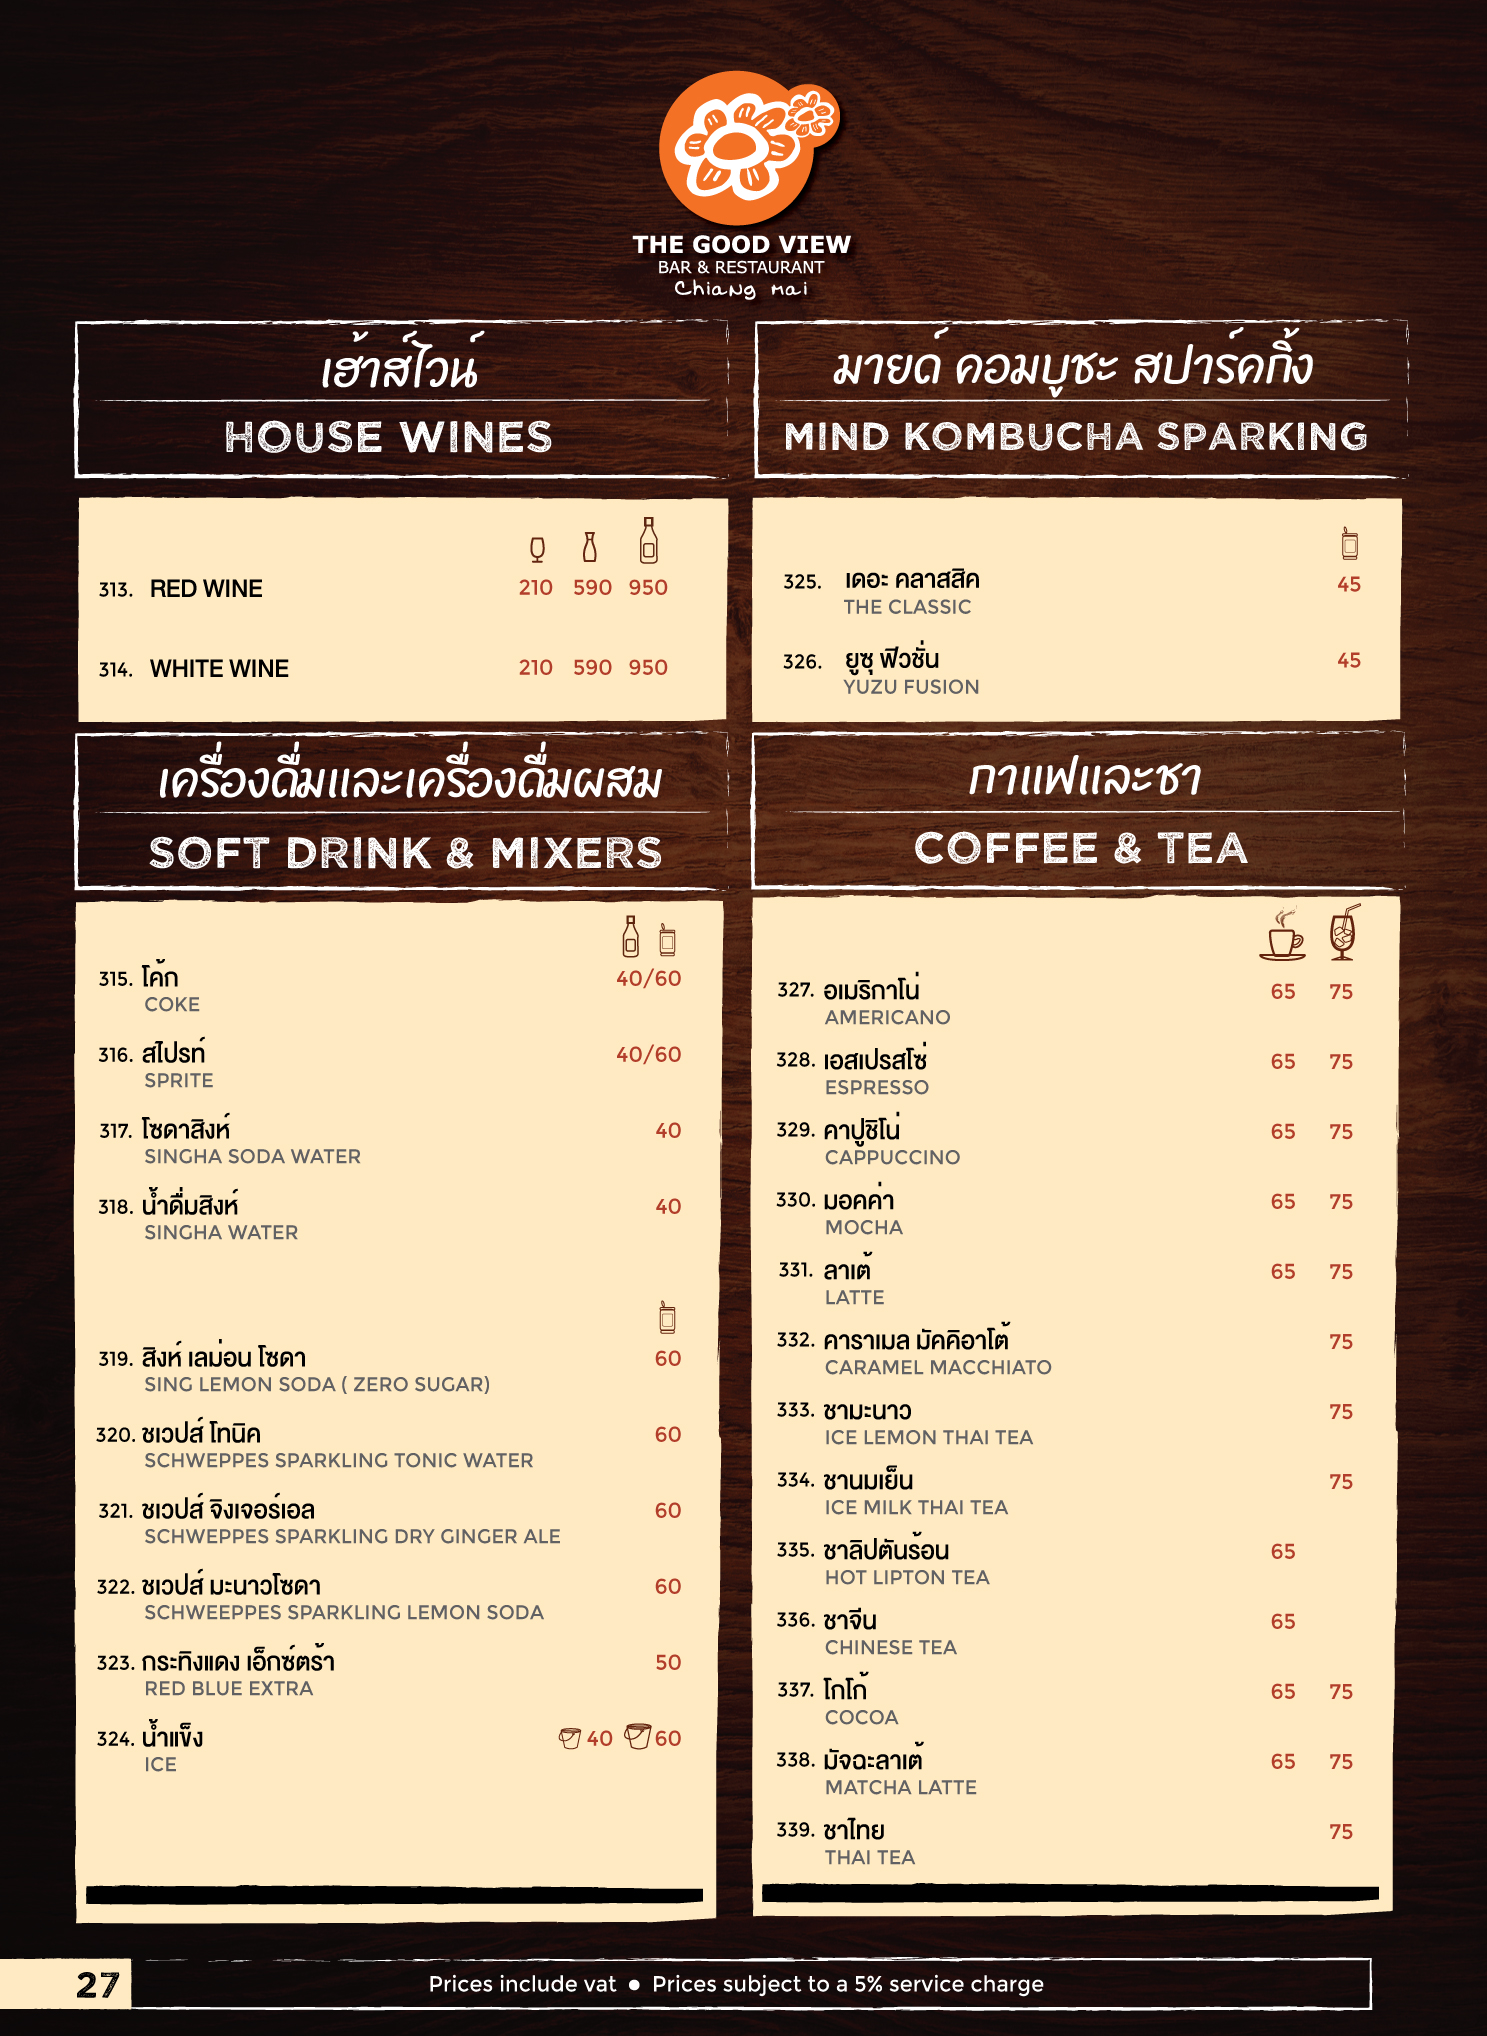 Main Menu of The Good View Bar & Restaurant Chiang Mai